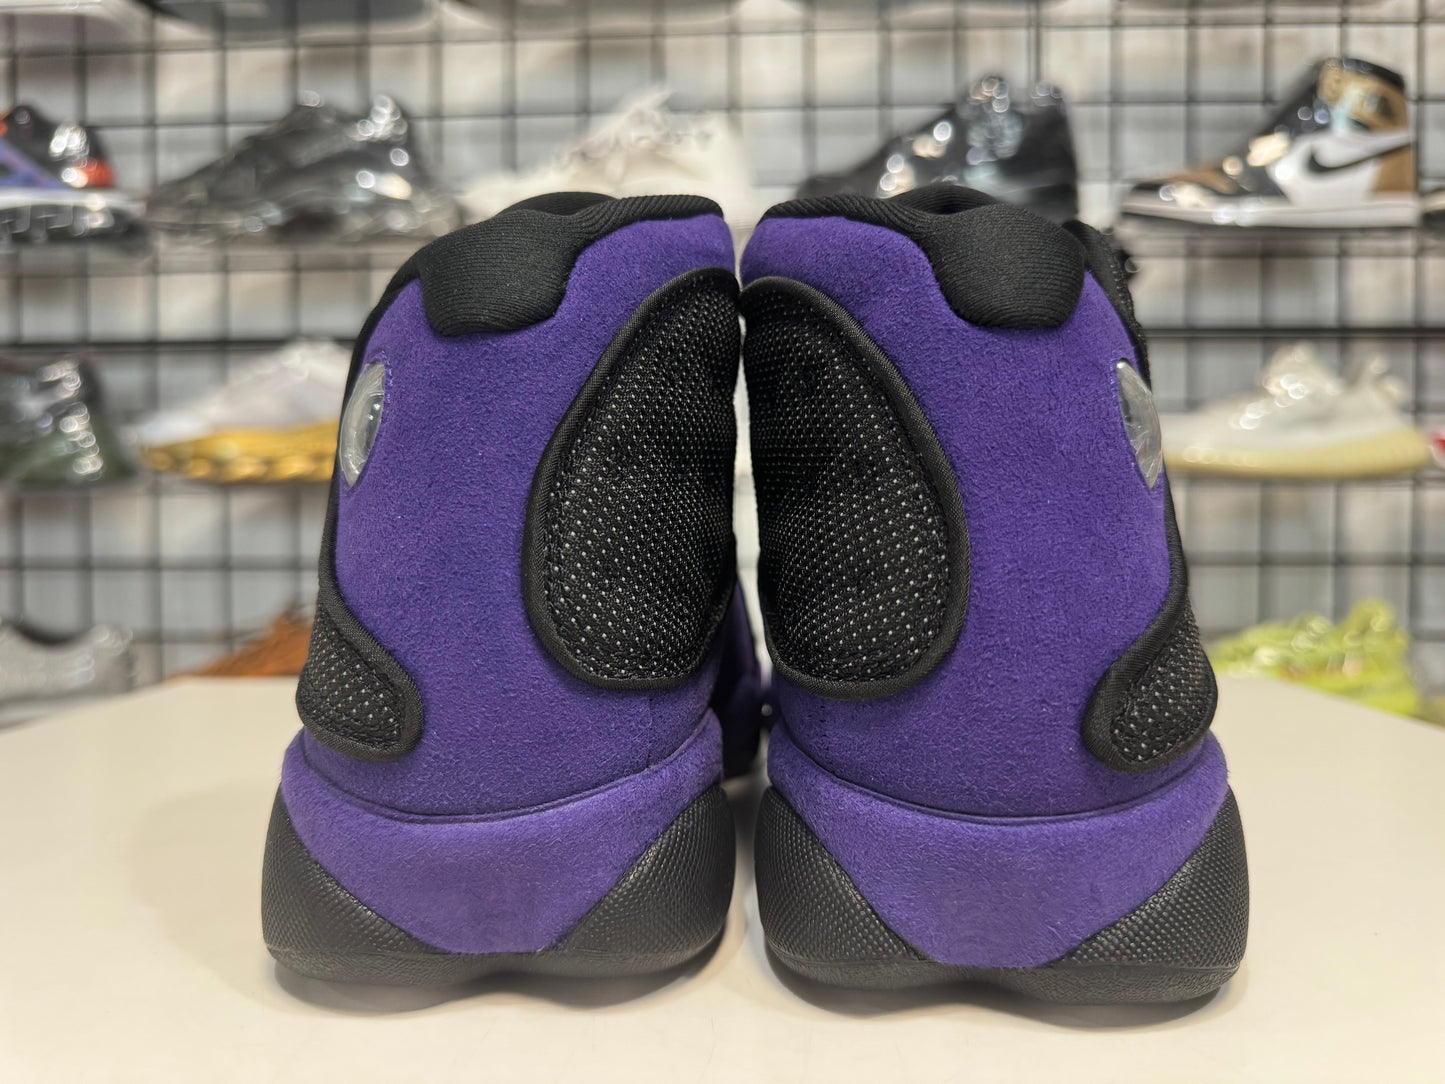 Brand New Jordan 13 Court Purple Size 8.5